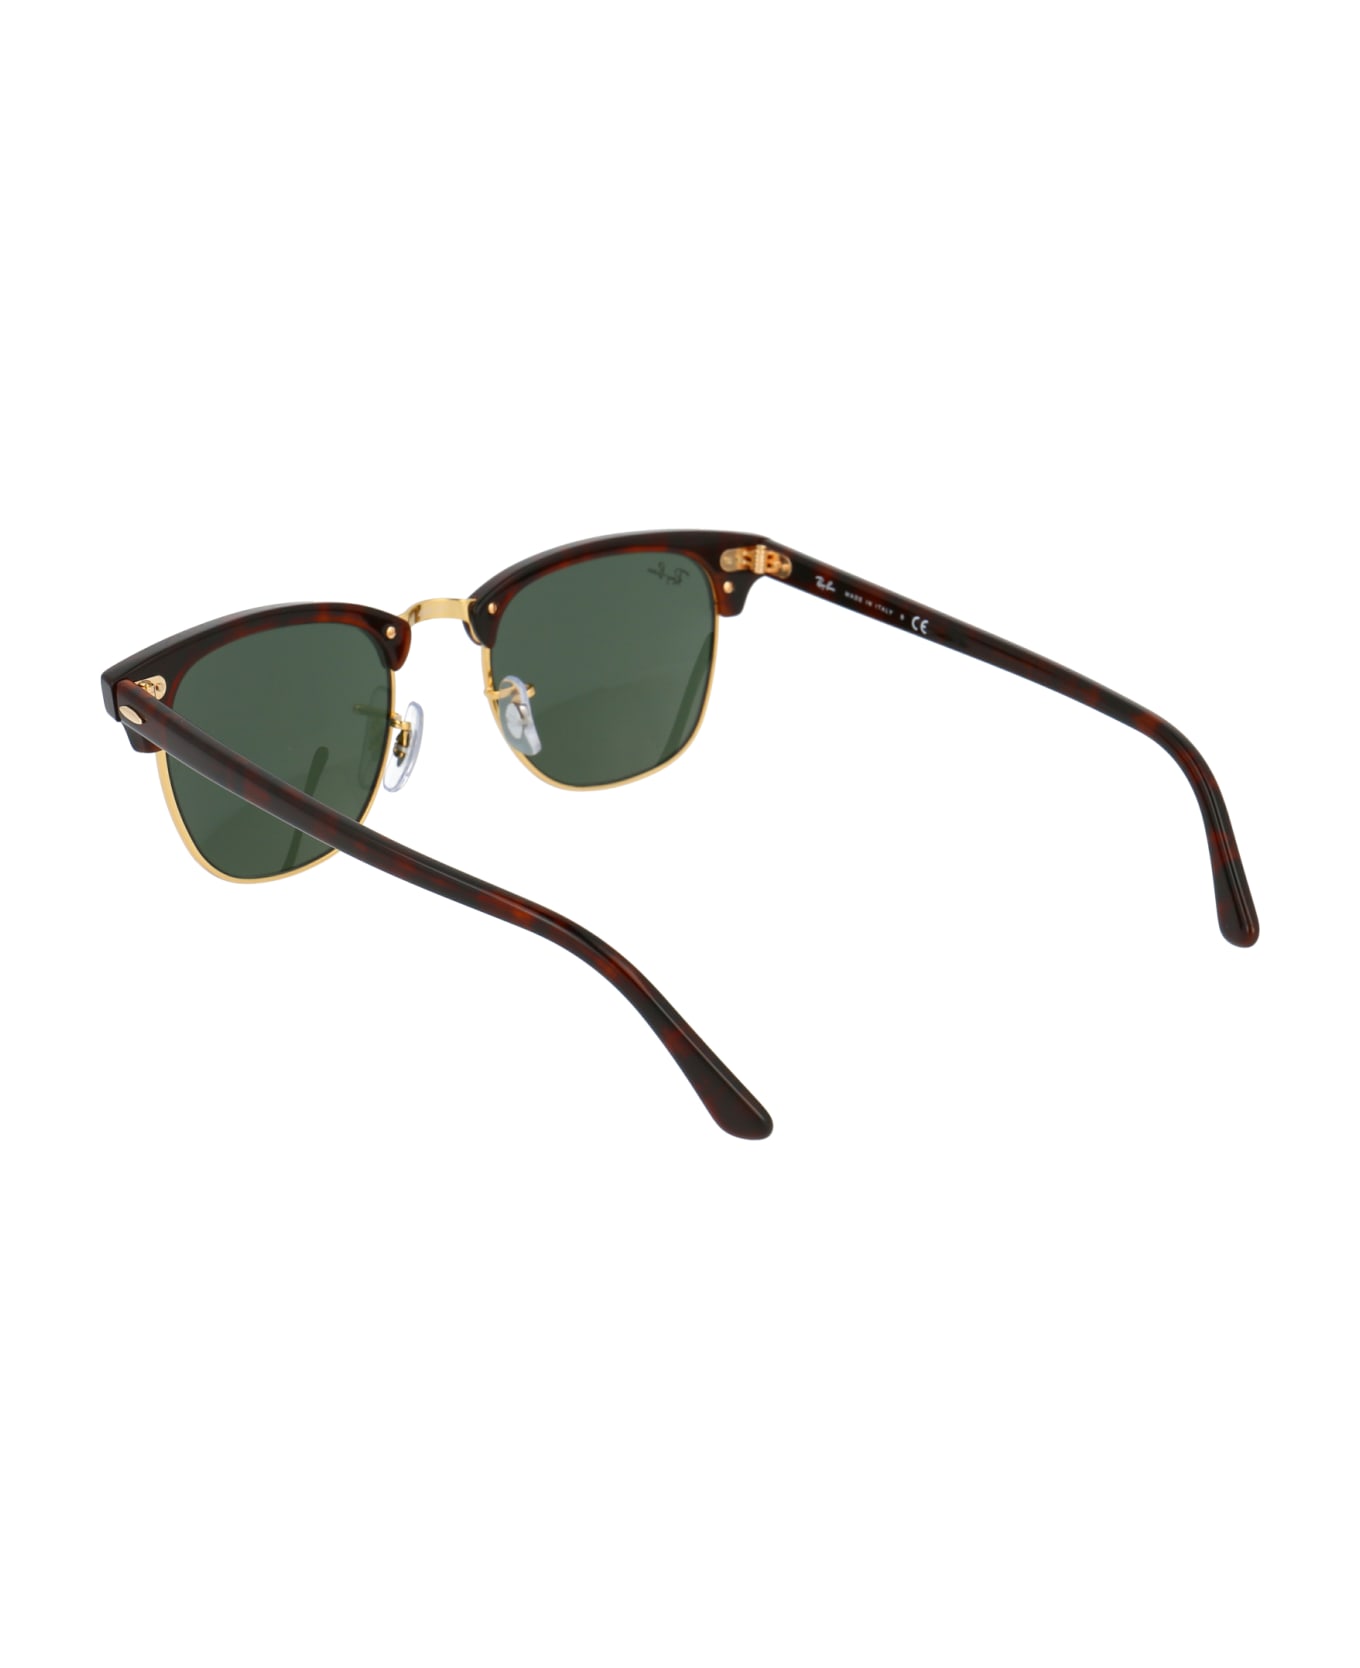 Ray-Ban Clubmaster Sunglasses - W0366 Tortoise On Gold サングラス